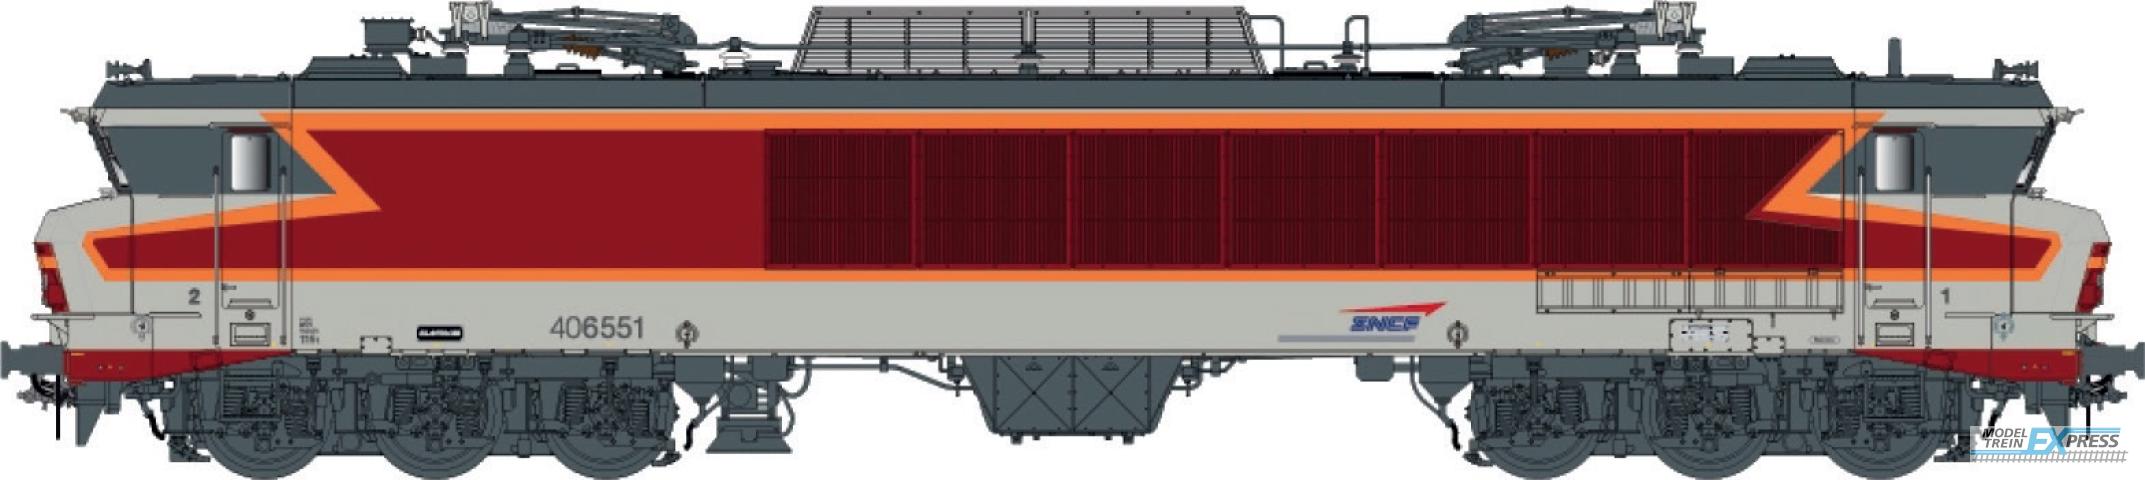 LS Models 10318S CC 6551, grey/red/orange, livery ARZENS, logo cap,Vénissieux depot  /  Ep. V  /  SNCF  /  HO  /  DC SOUND  /  1 P.